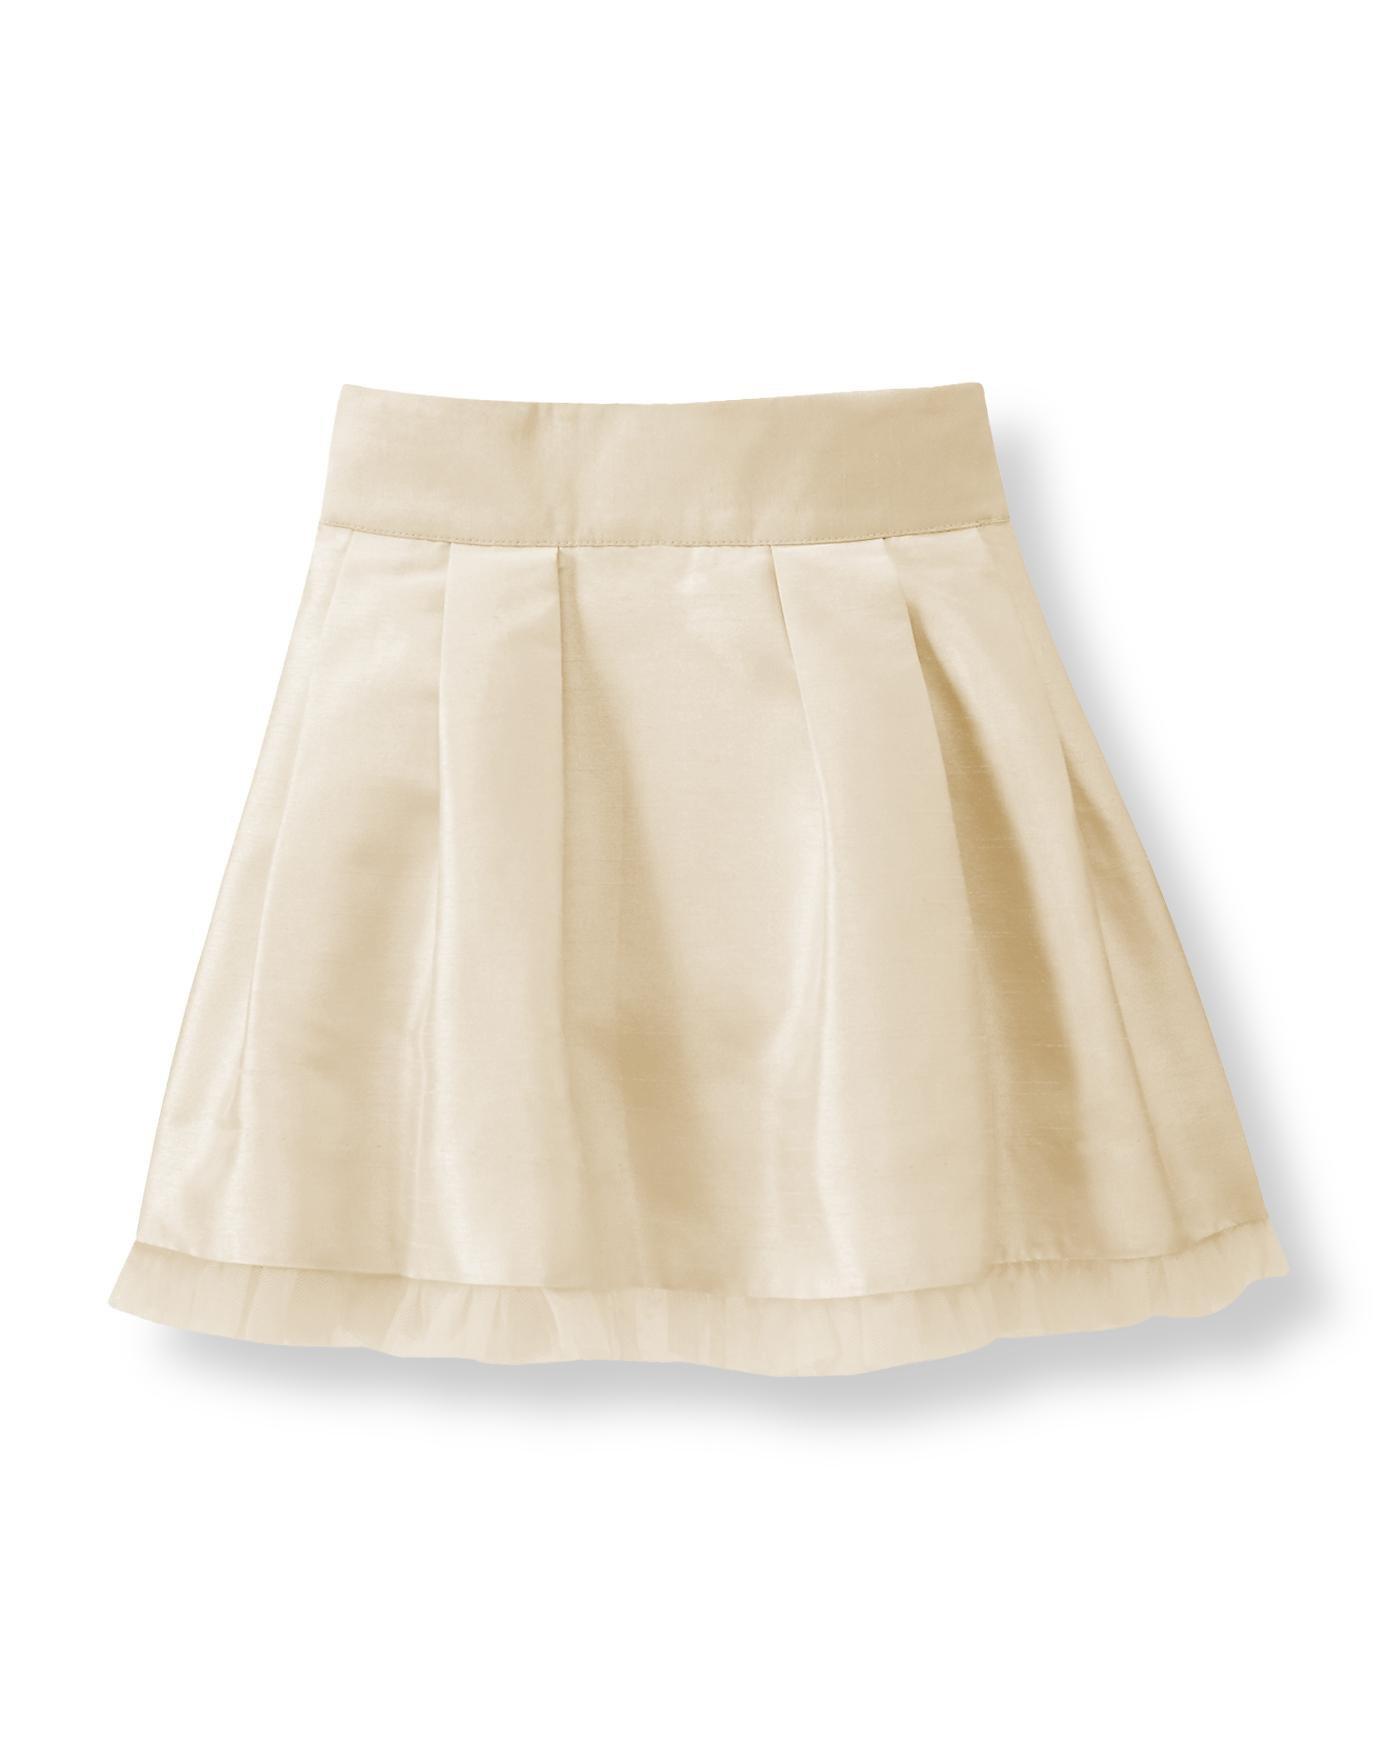 Ruffle Taffeta Skirt image number 0